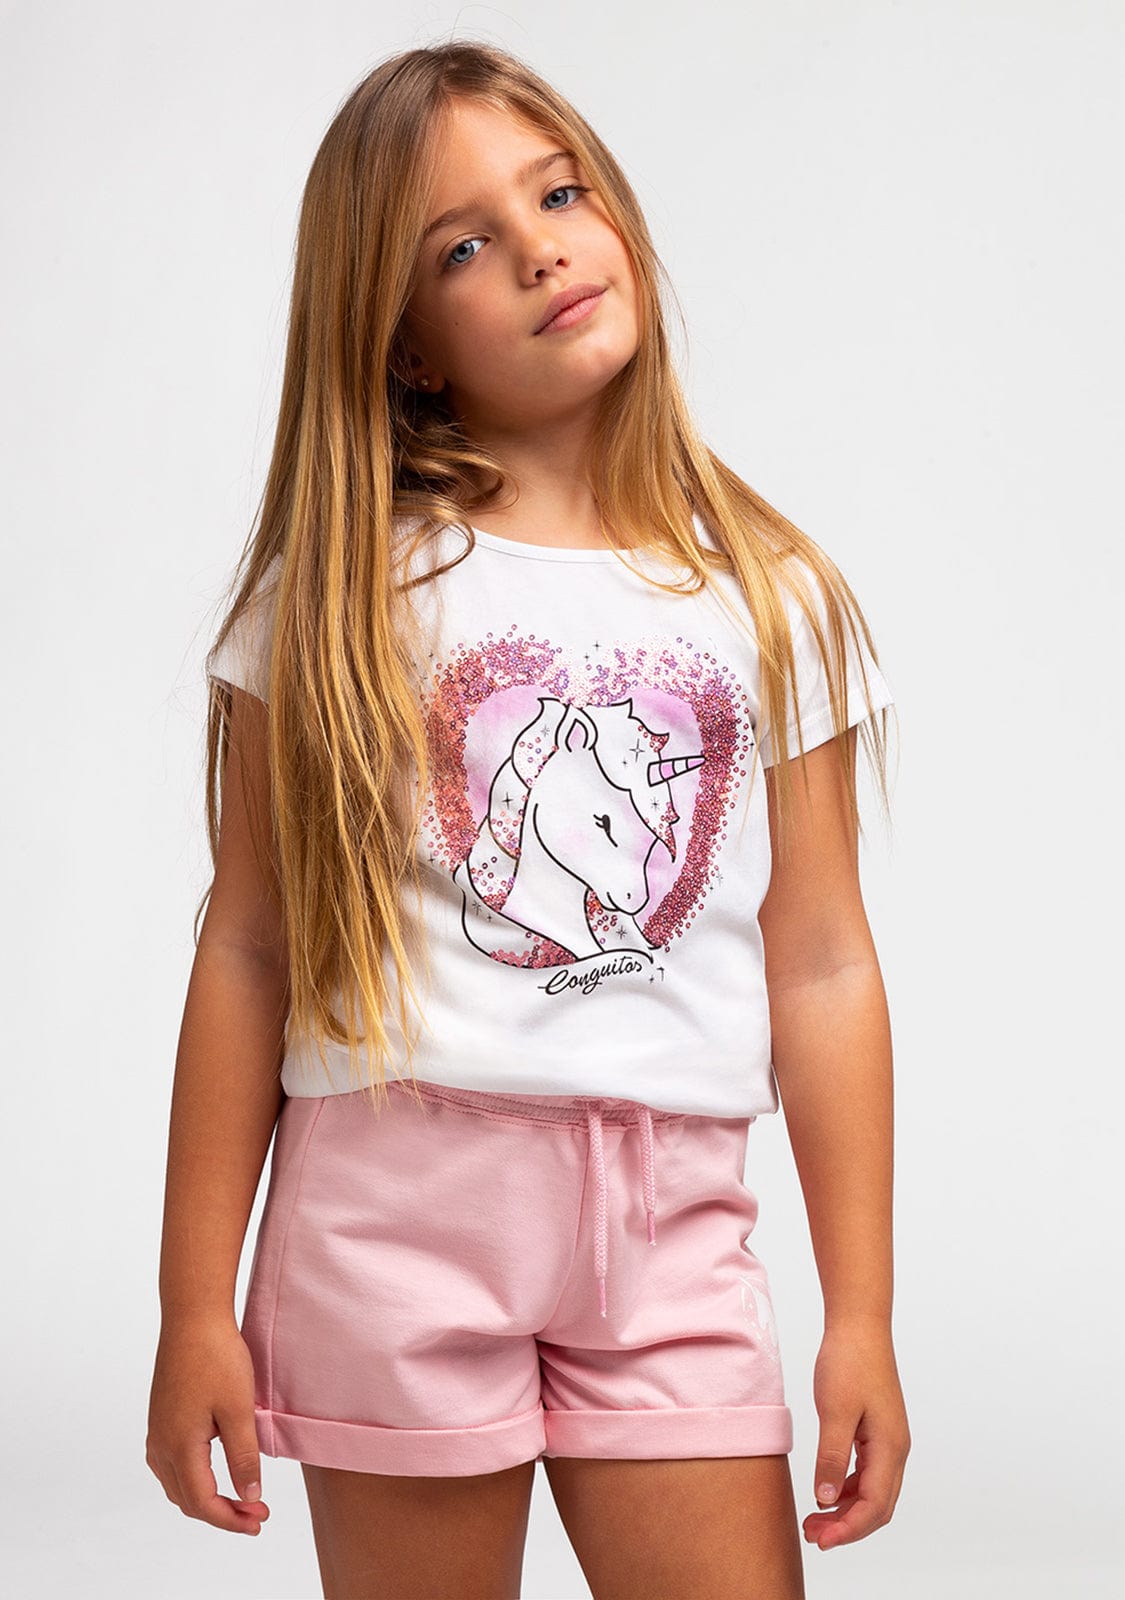 CONGUITOS TEXTIL Clothing Girl's Unicorn Sequins T-Shirt